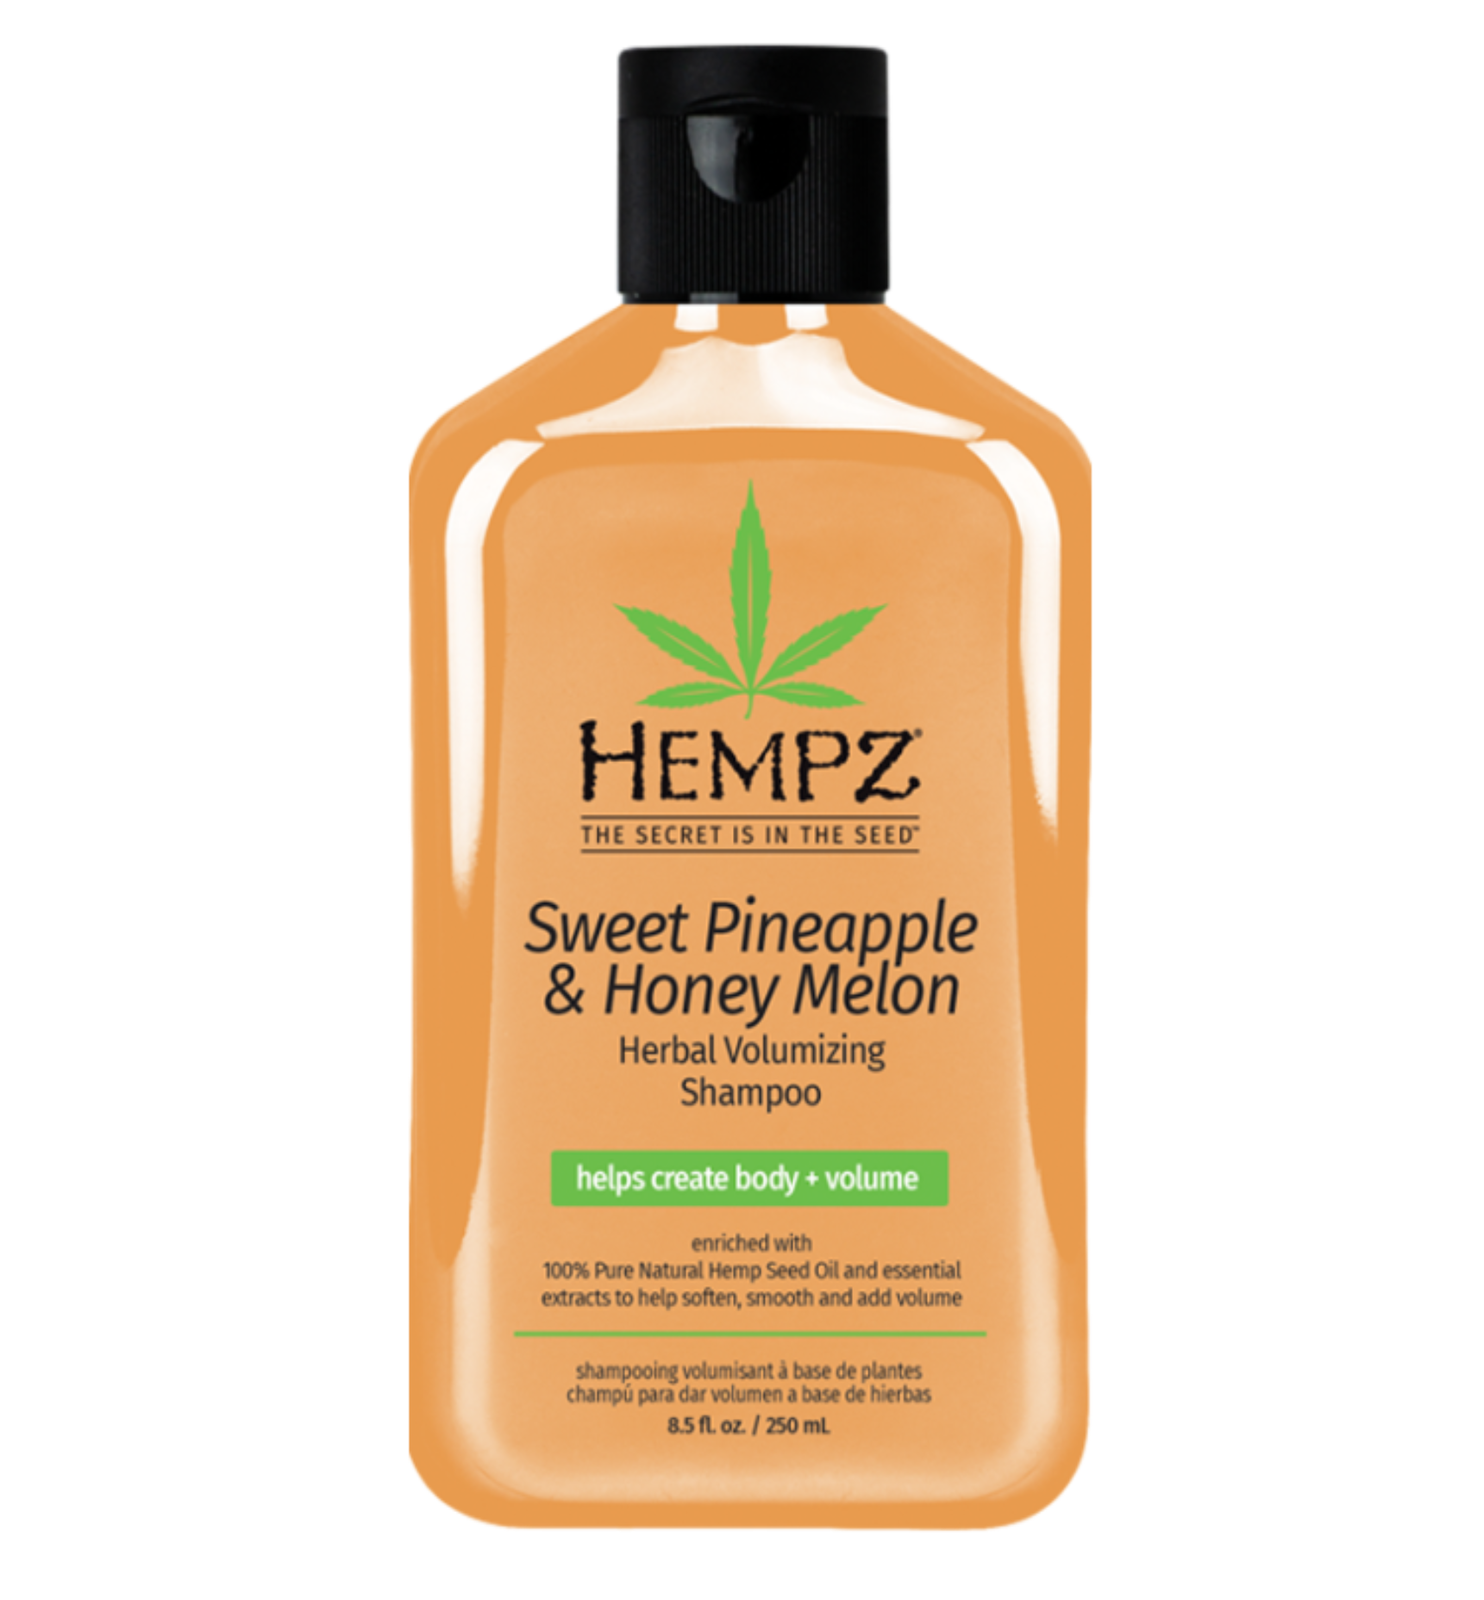 Hempz Sweet Pineapple & Honey Melon Volumizing Shampoo - $18.00